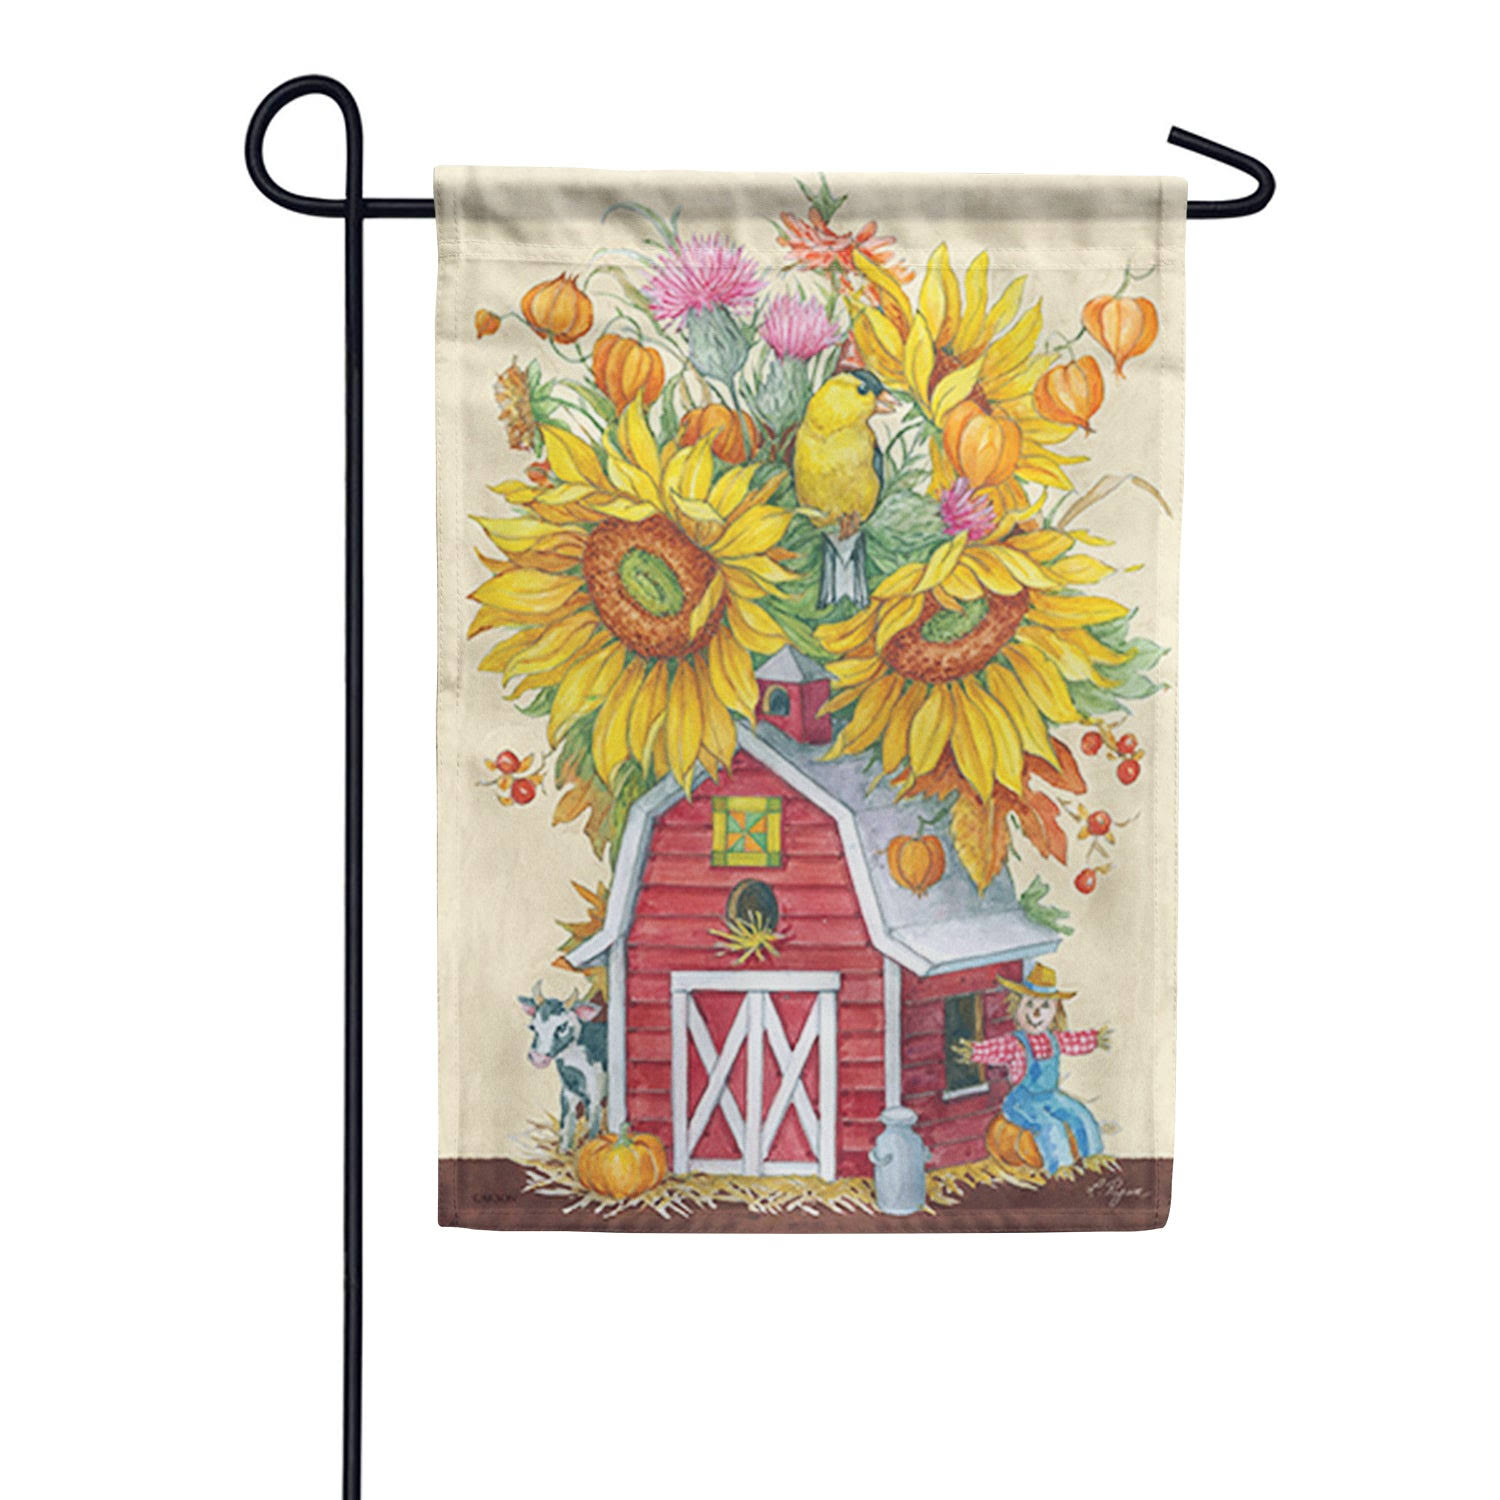 Carson Garden Flag - Barn Bouquet, Dura Soft Double Sided Garden Flag, 12.5x 18 inch Outdoor Yard Decorative Flag, Size: Small